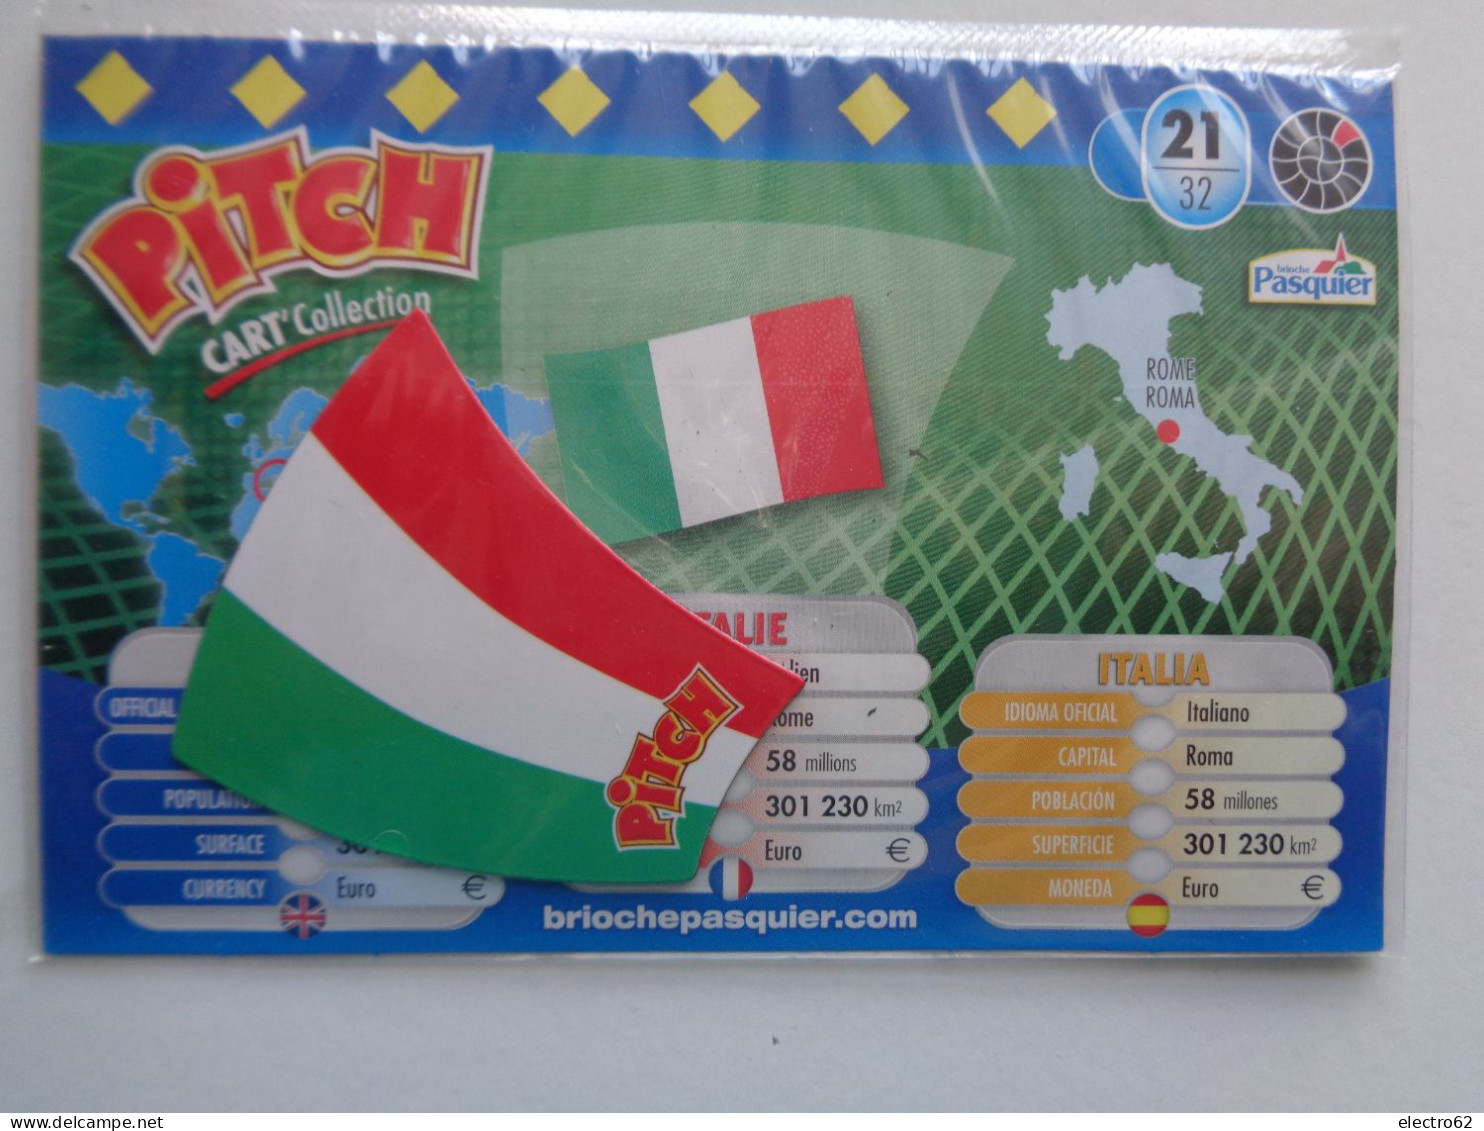 Magnet Pasquier Pitch Drapeau Italie Italy Italia Rome Roma Flag Bandiere Bandiera Bandera Flaggen Bandieras Flagge - Turismo